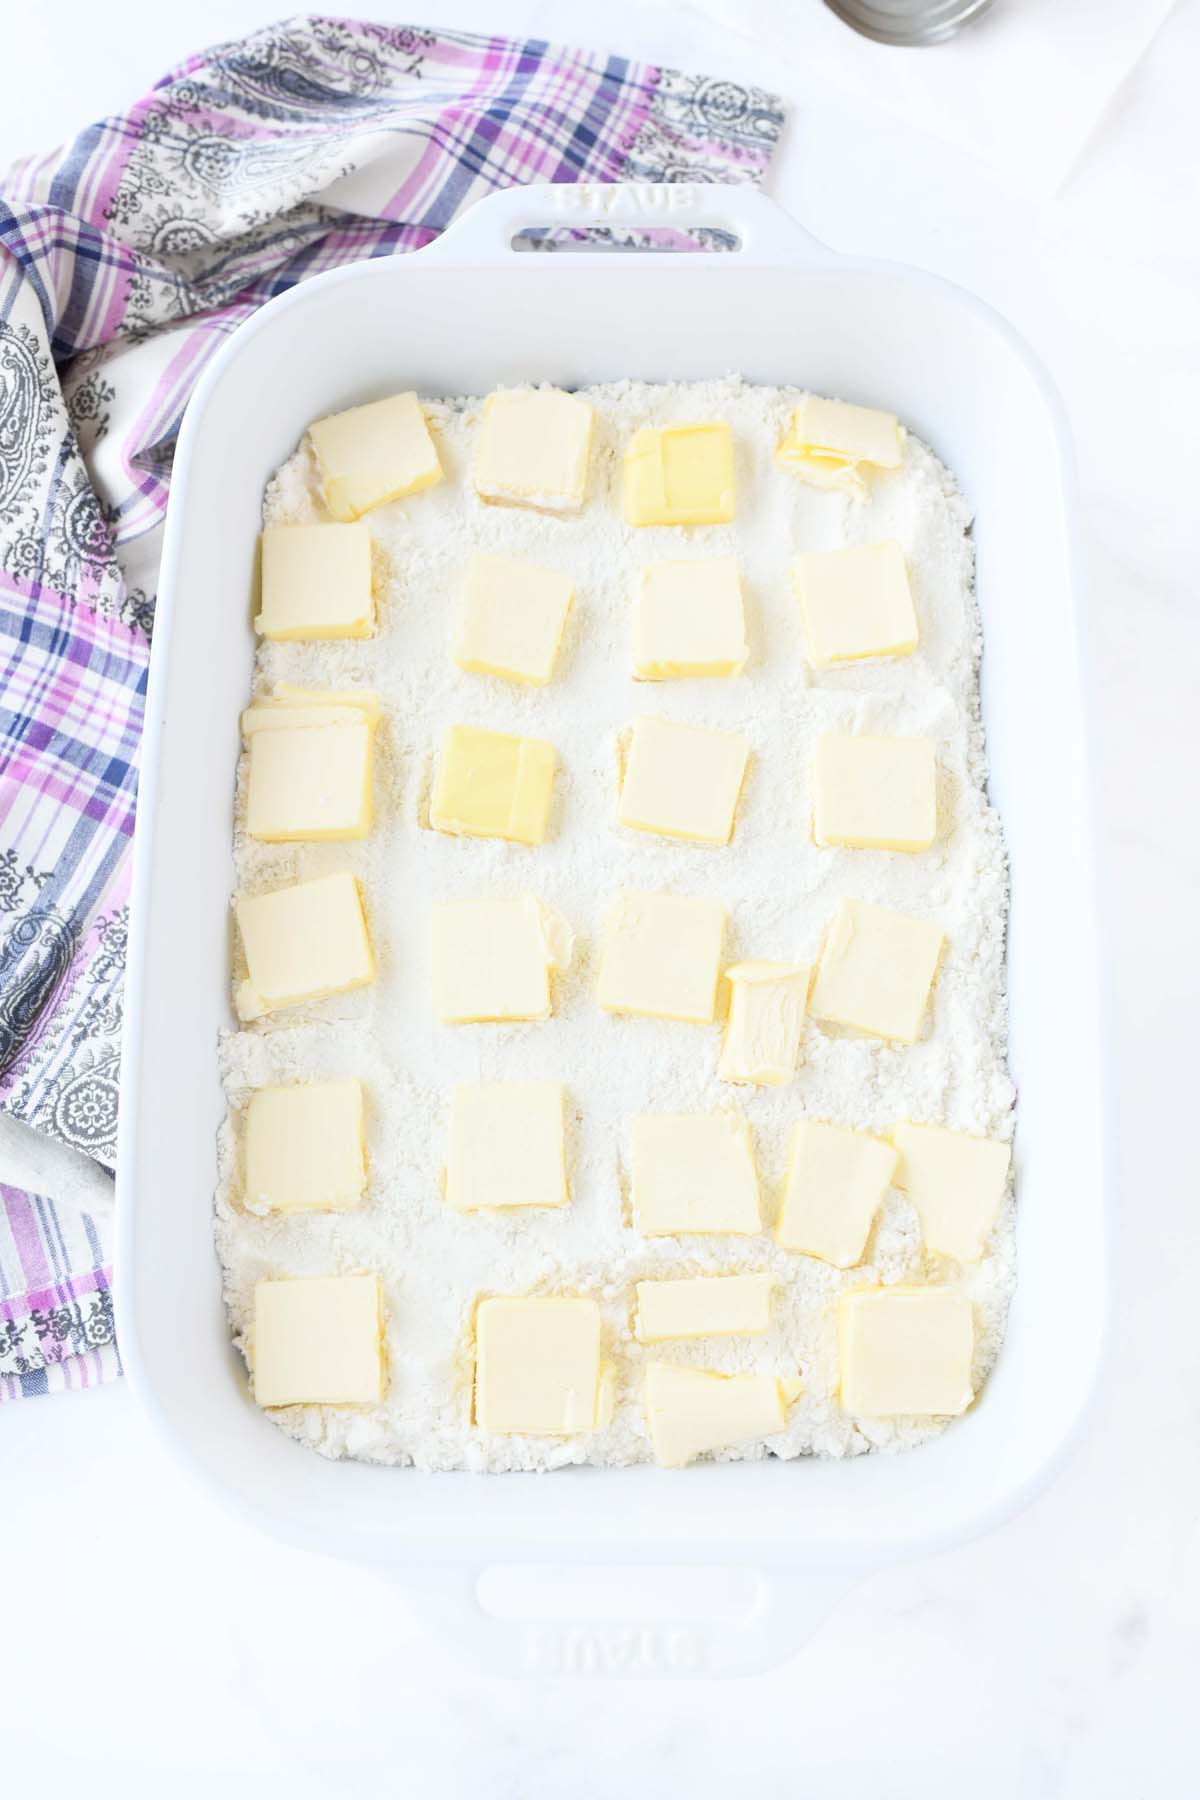 Butter pads on lemon cake mix.